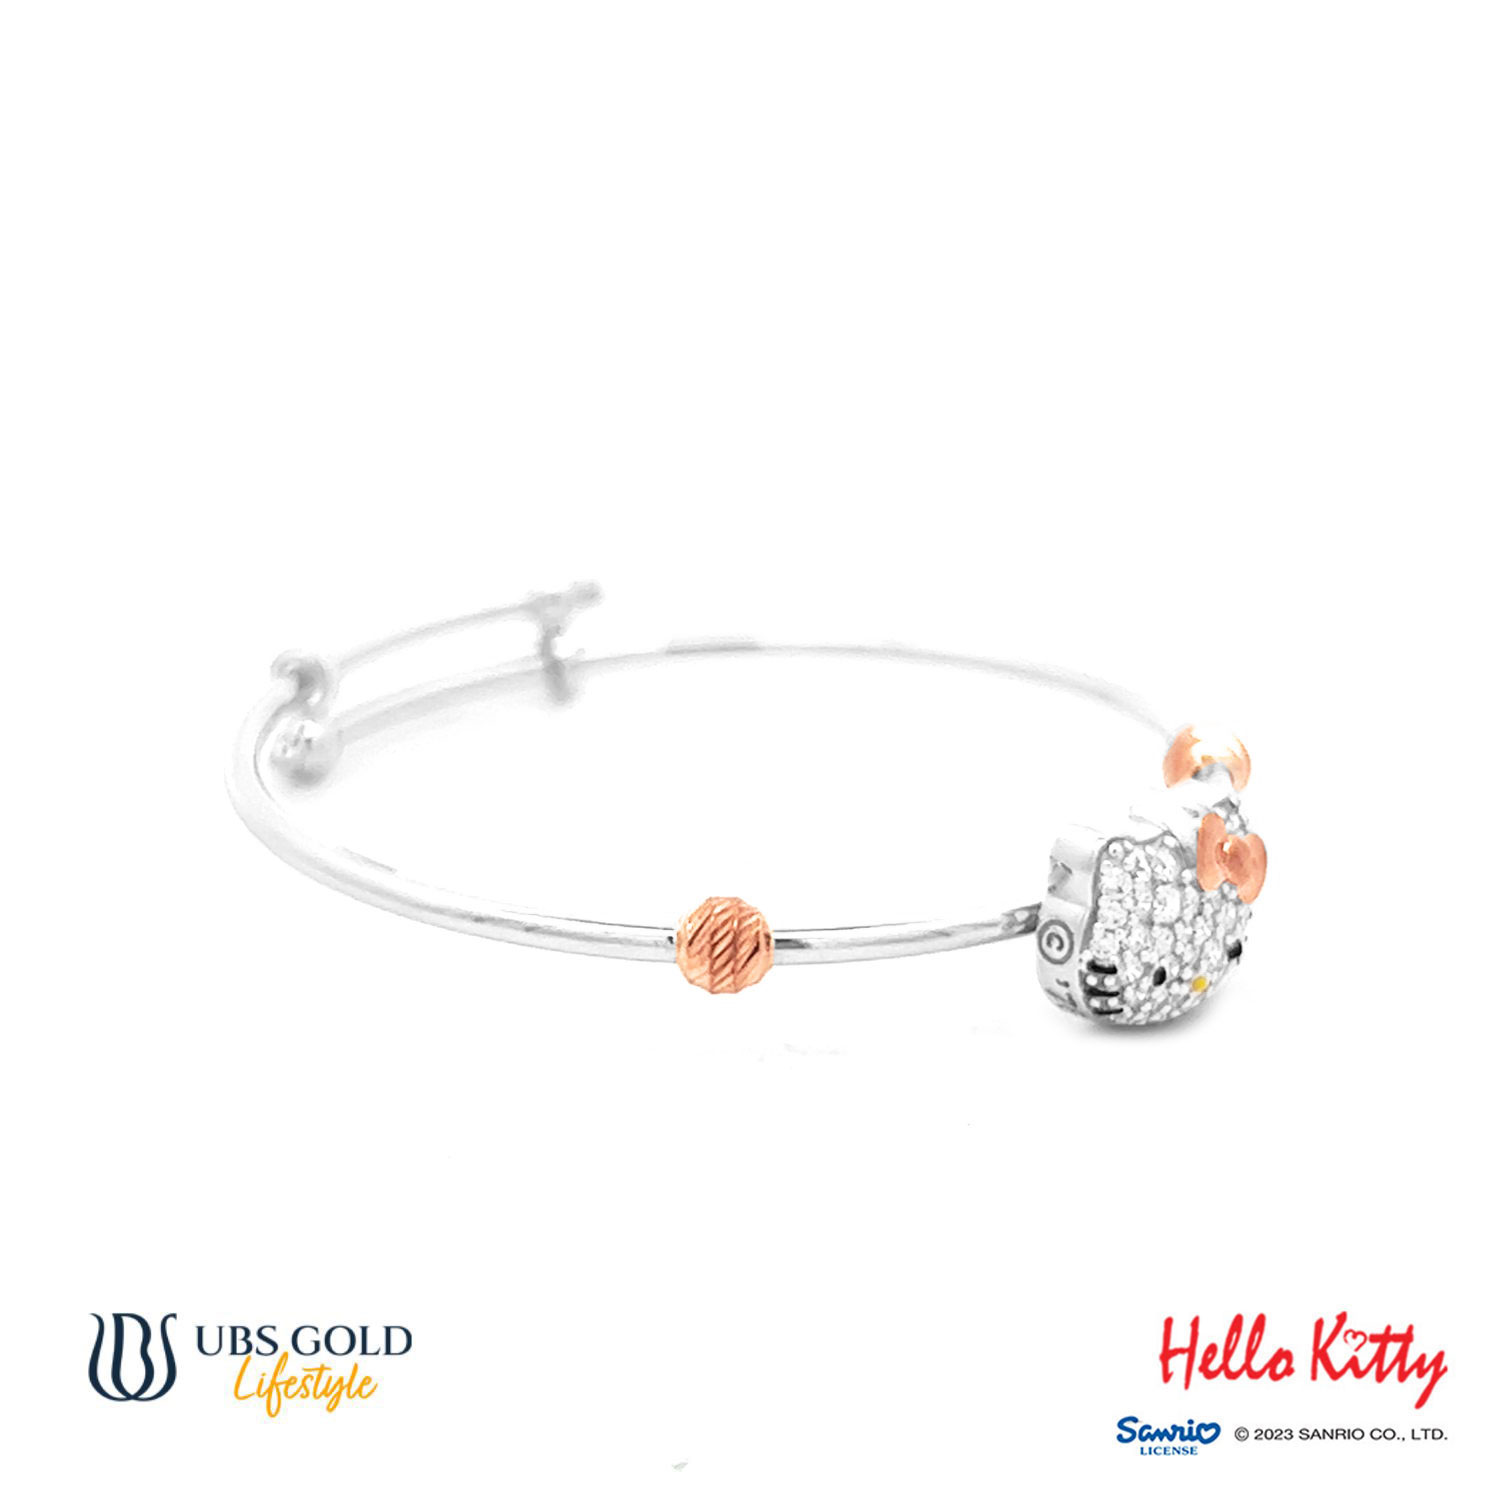 UBS Gold Gelang Emas Bayi Sanrio Hello Kitty - Vgz0001 - 17K